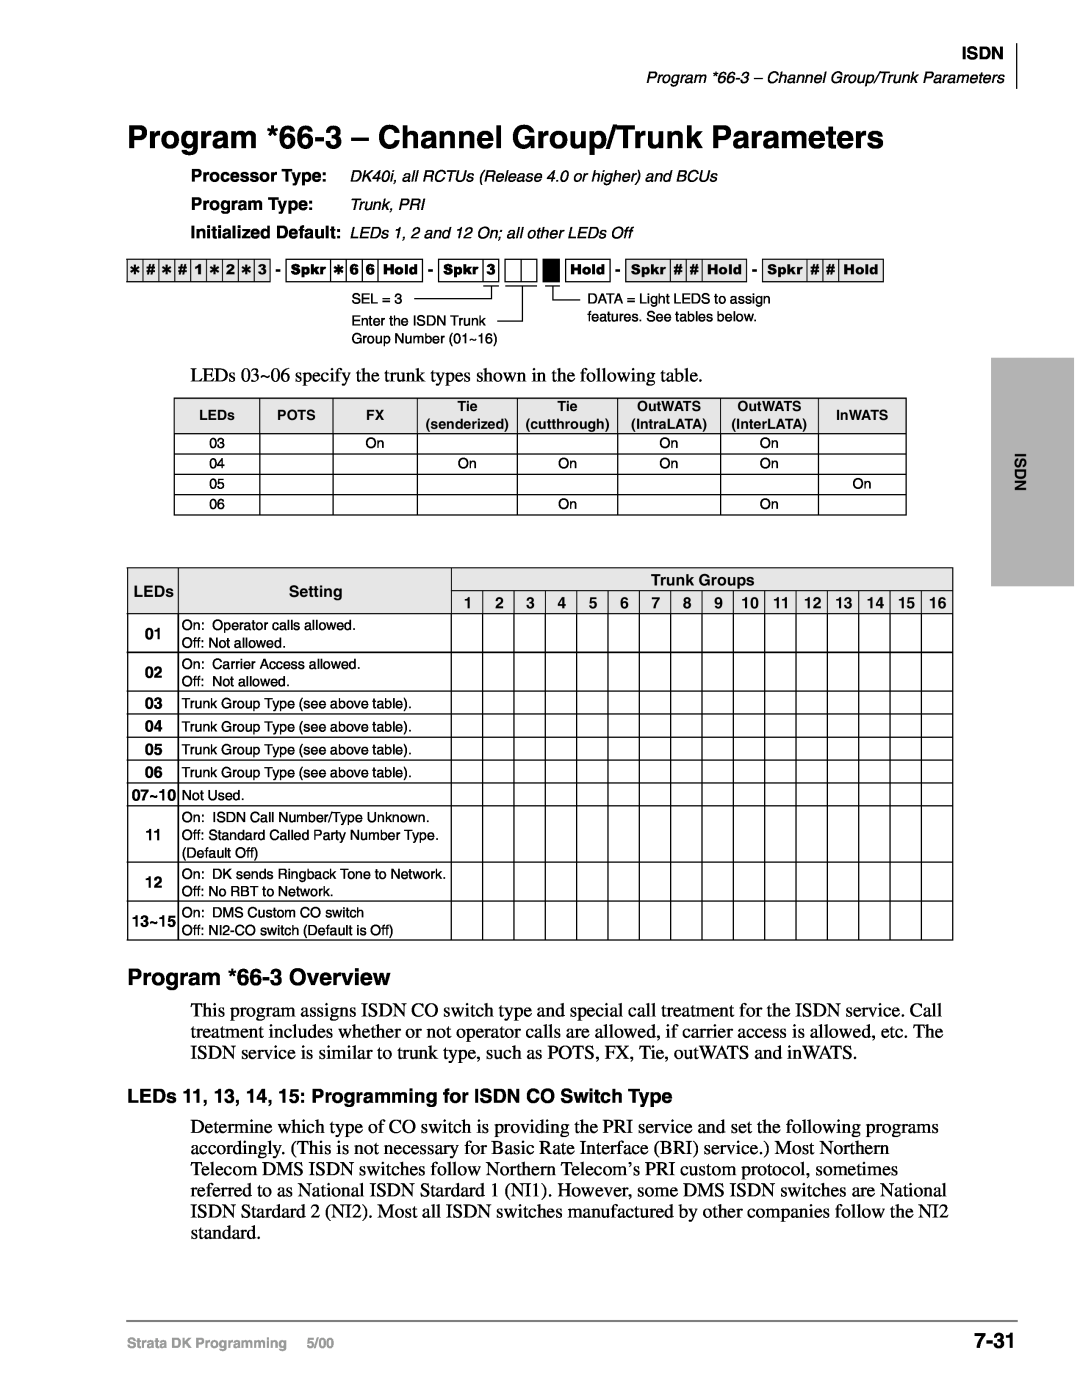 Toshiba DK424I, dk14, DK40I manual Program *66-3– Channel Group/Trunk Parameters, Program *66-3Overview, 7-31 